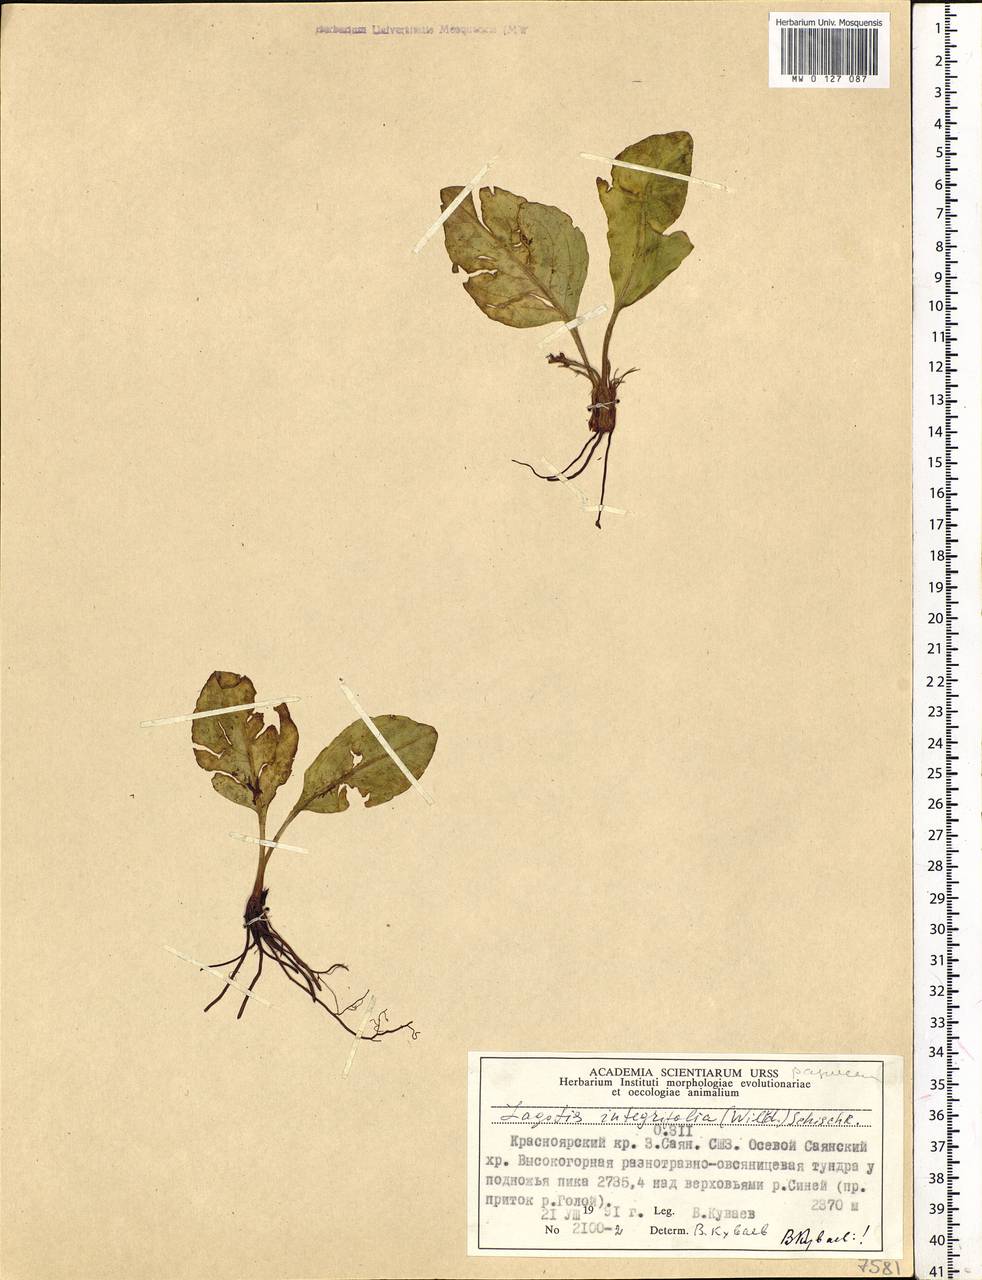 Lagotis integrifolia (Willd.) Schischk. ex Vikulova, Siberia, Altai & Sayany Mountains (S2) (Russia)